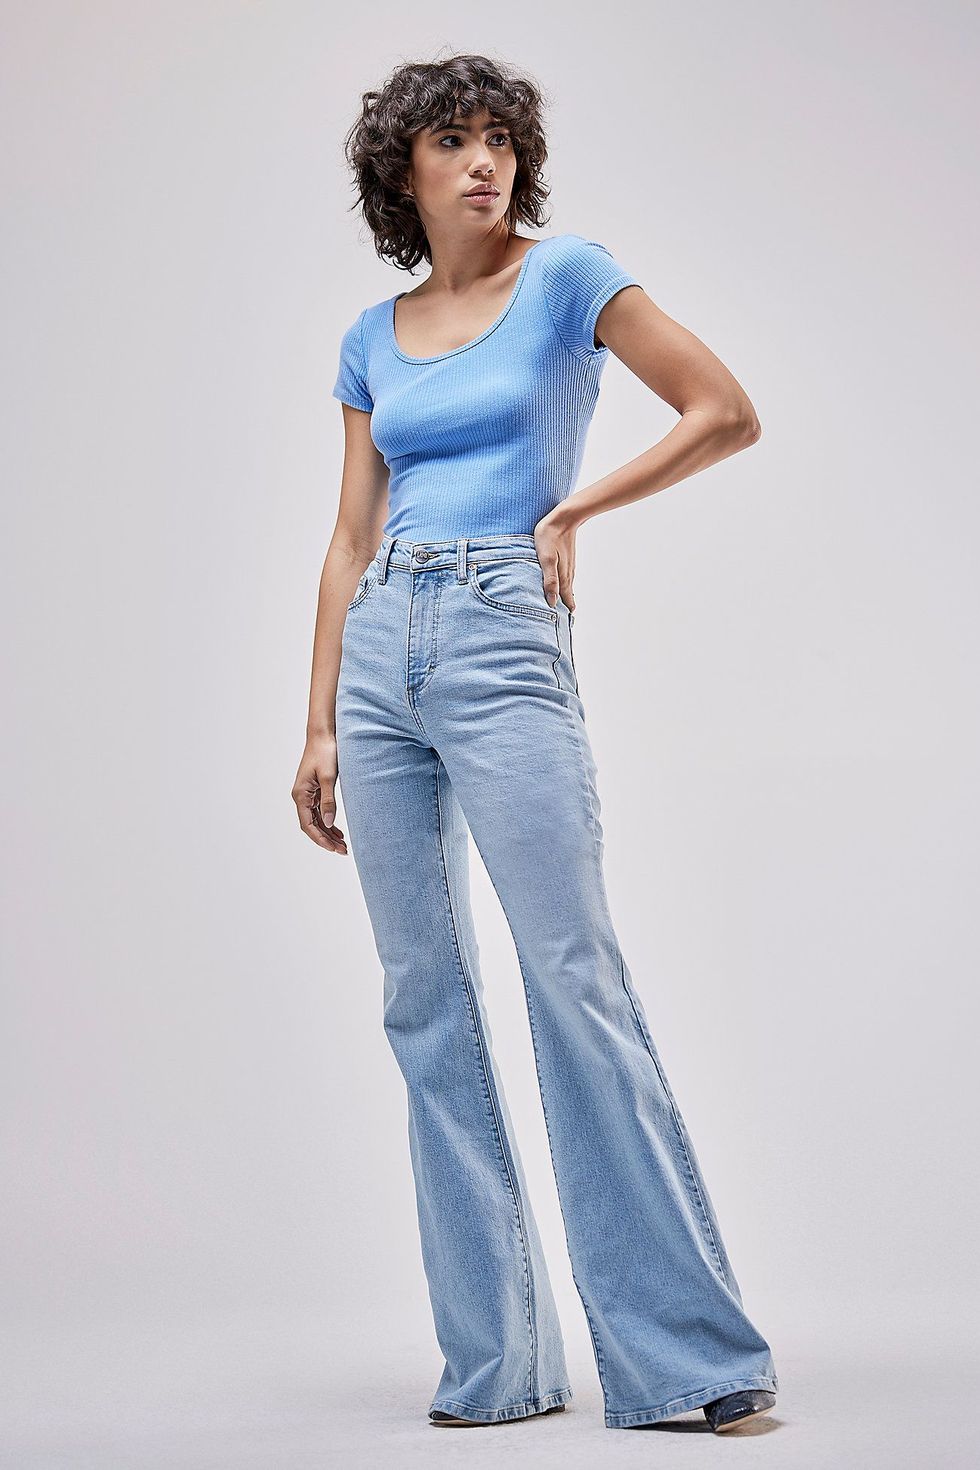 Kapitein Brie Logisch Vrijlating 13 Best Jeans for Tall Women in 2023 - Best Denim Brands for Tall Women